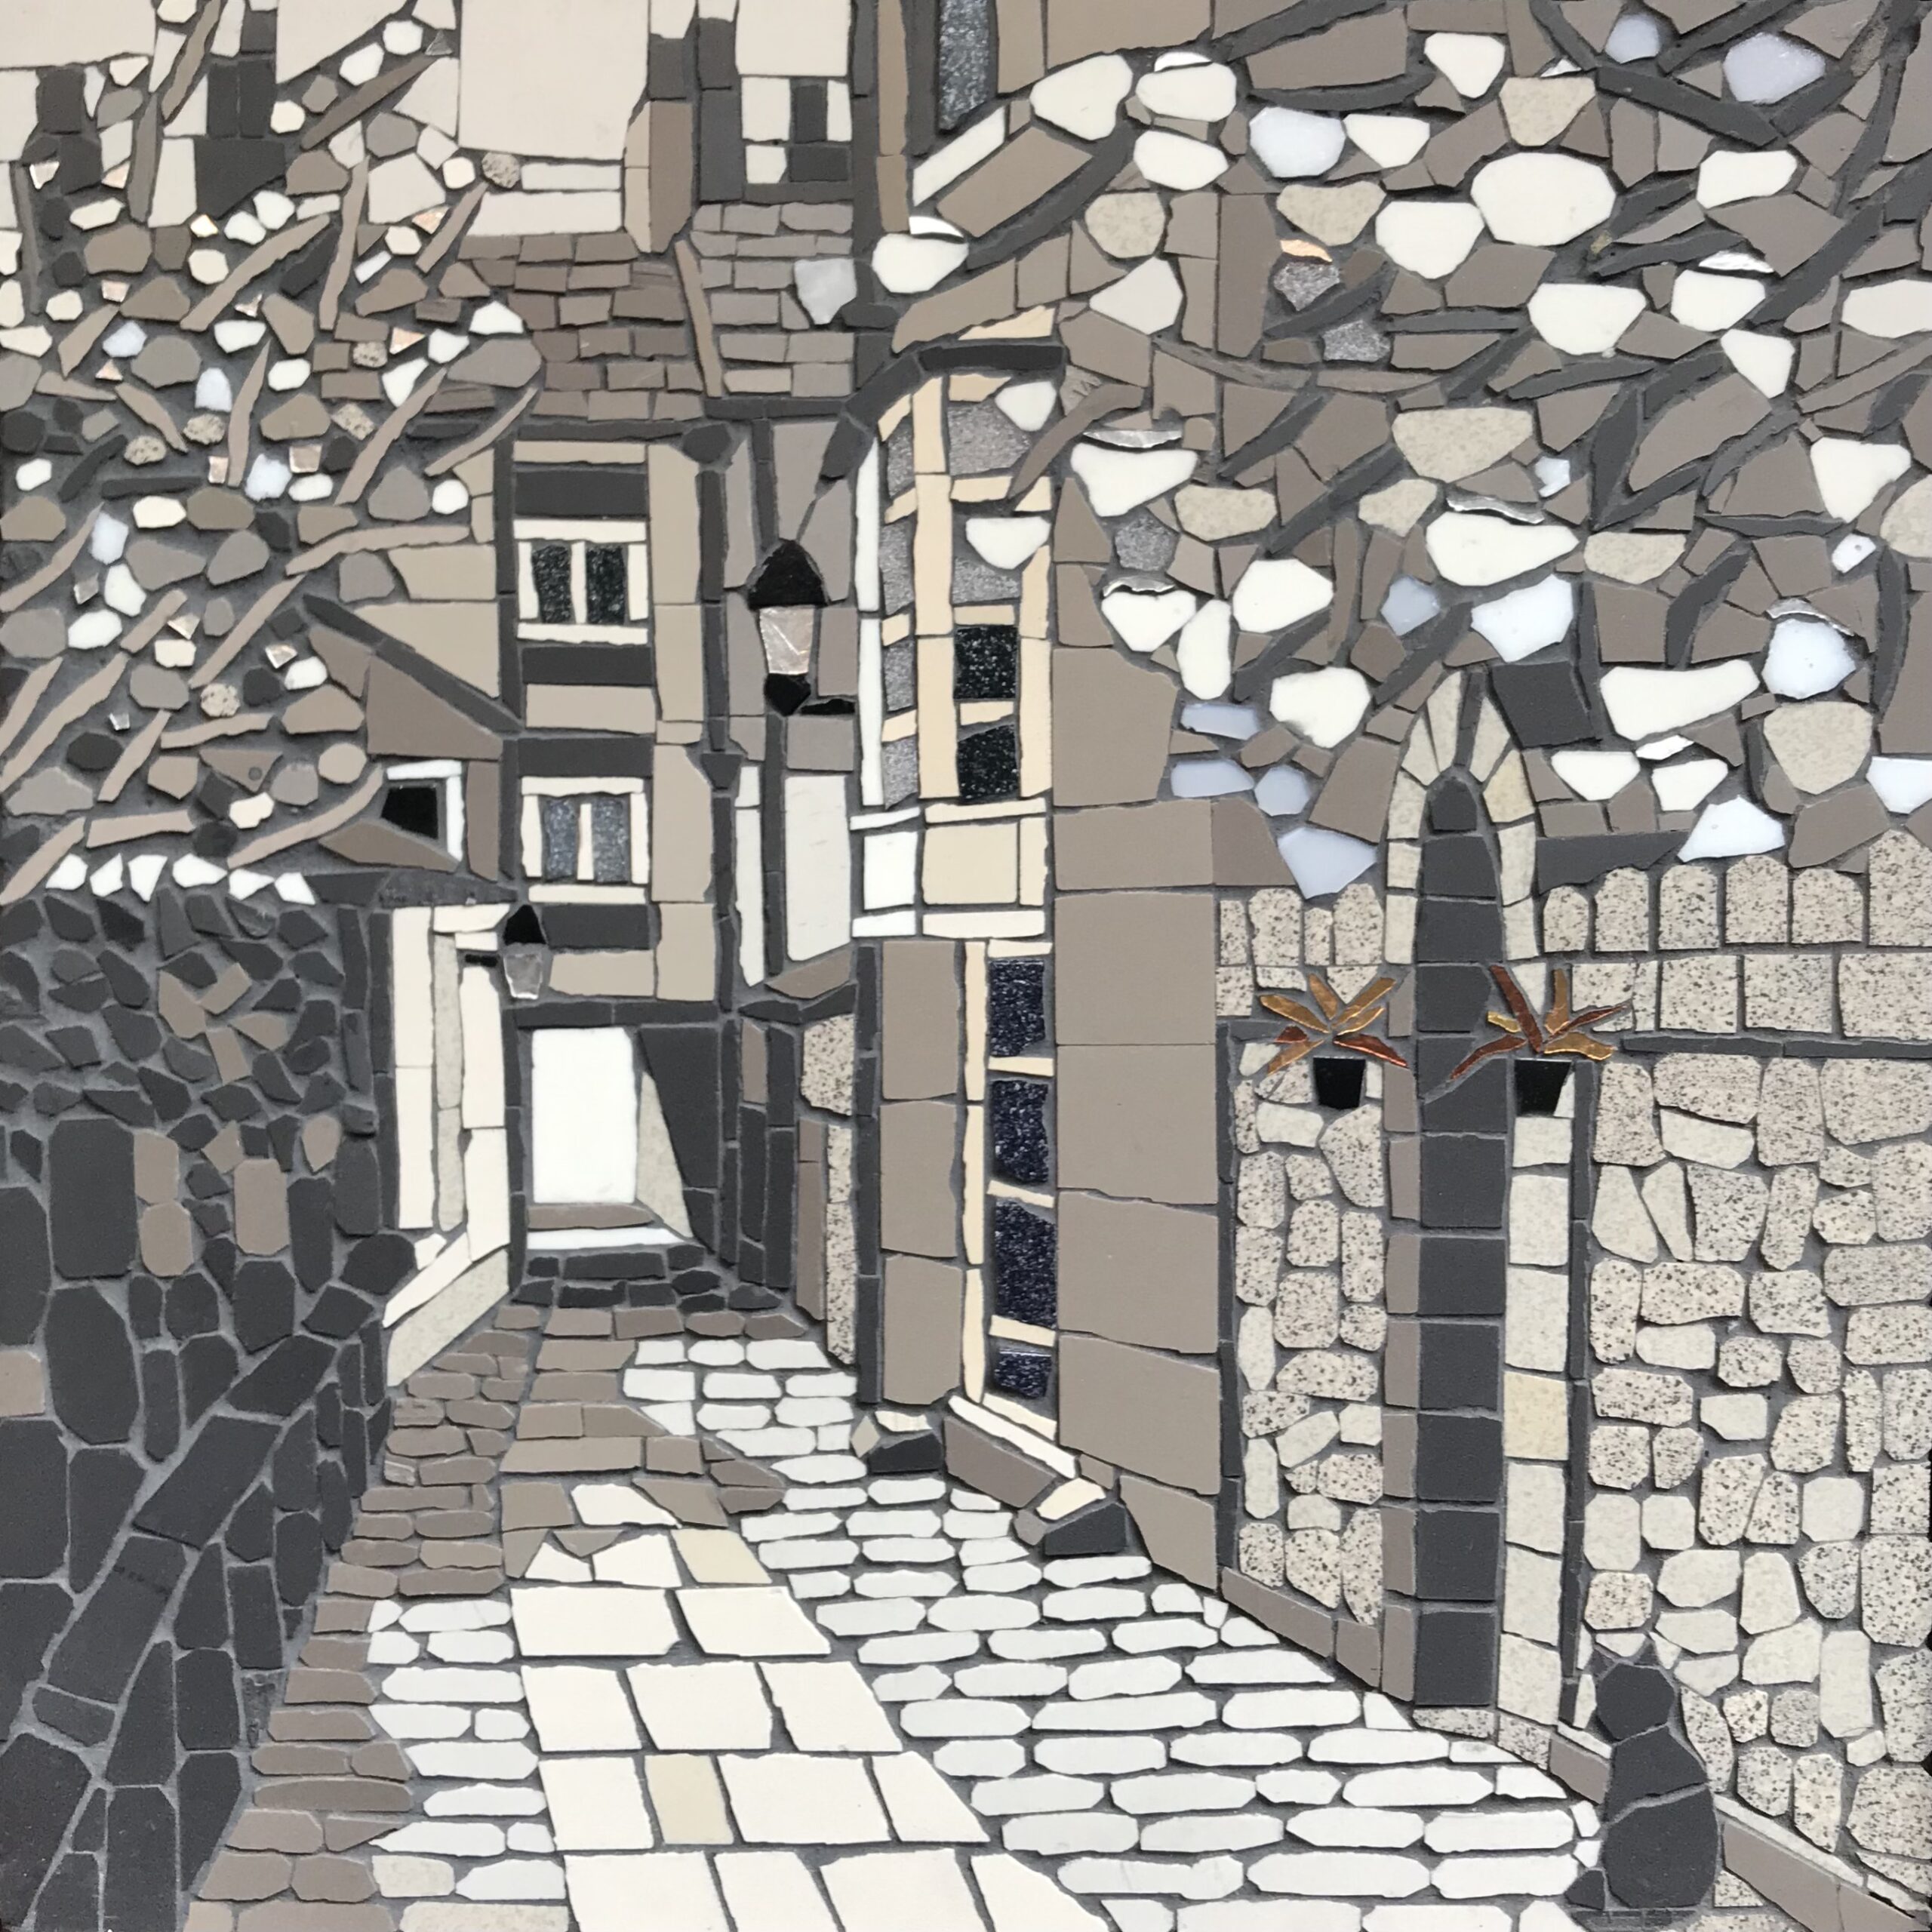 Current Work: 'Berry's Passage, Knaresborough' mosaic